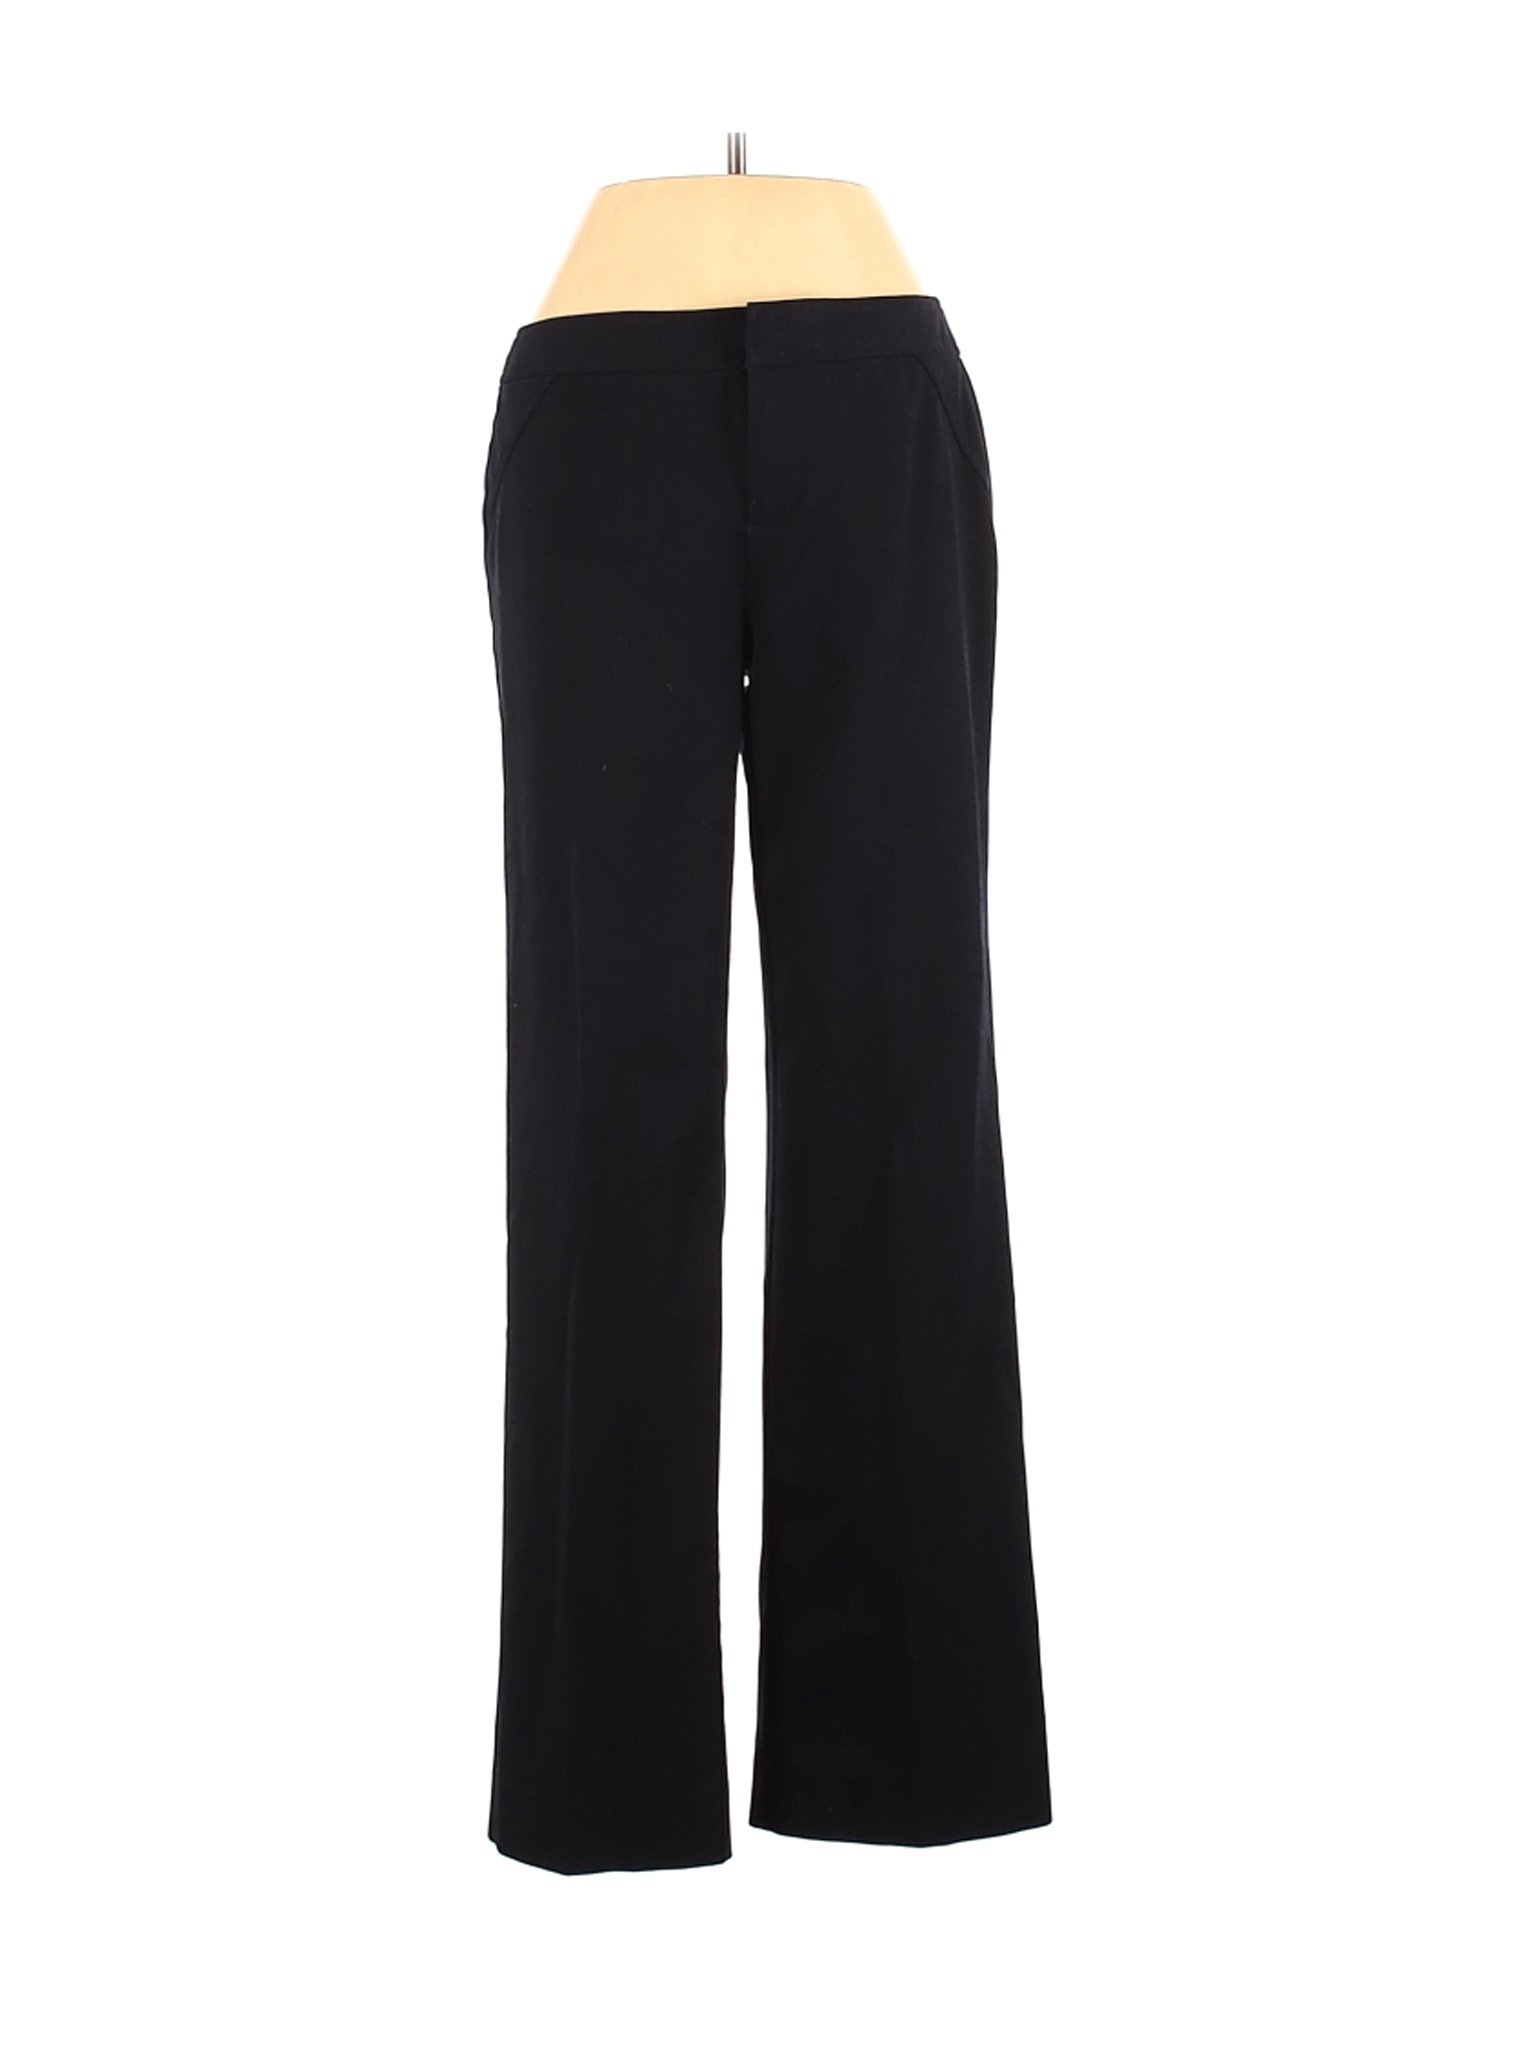 Liz Claiborne Women Black Dress Pants 2 Petites | eBay